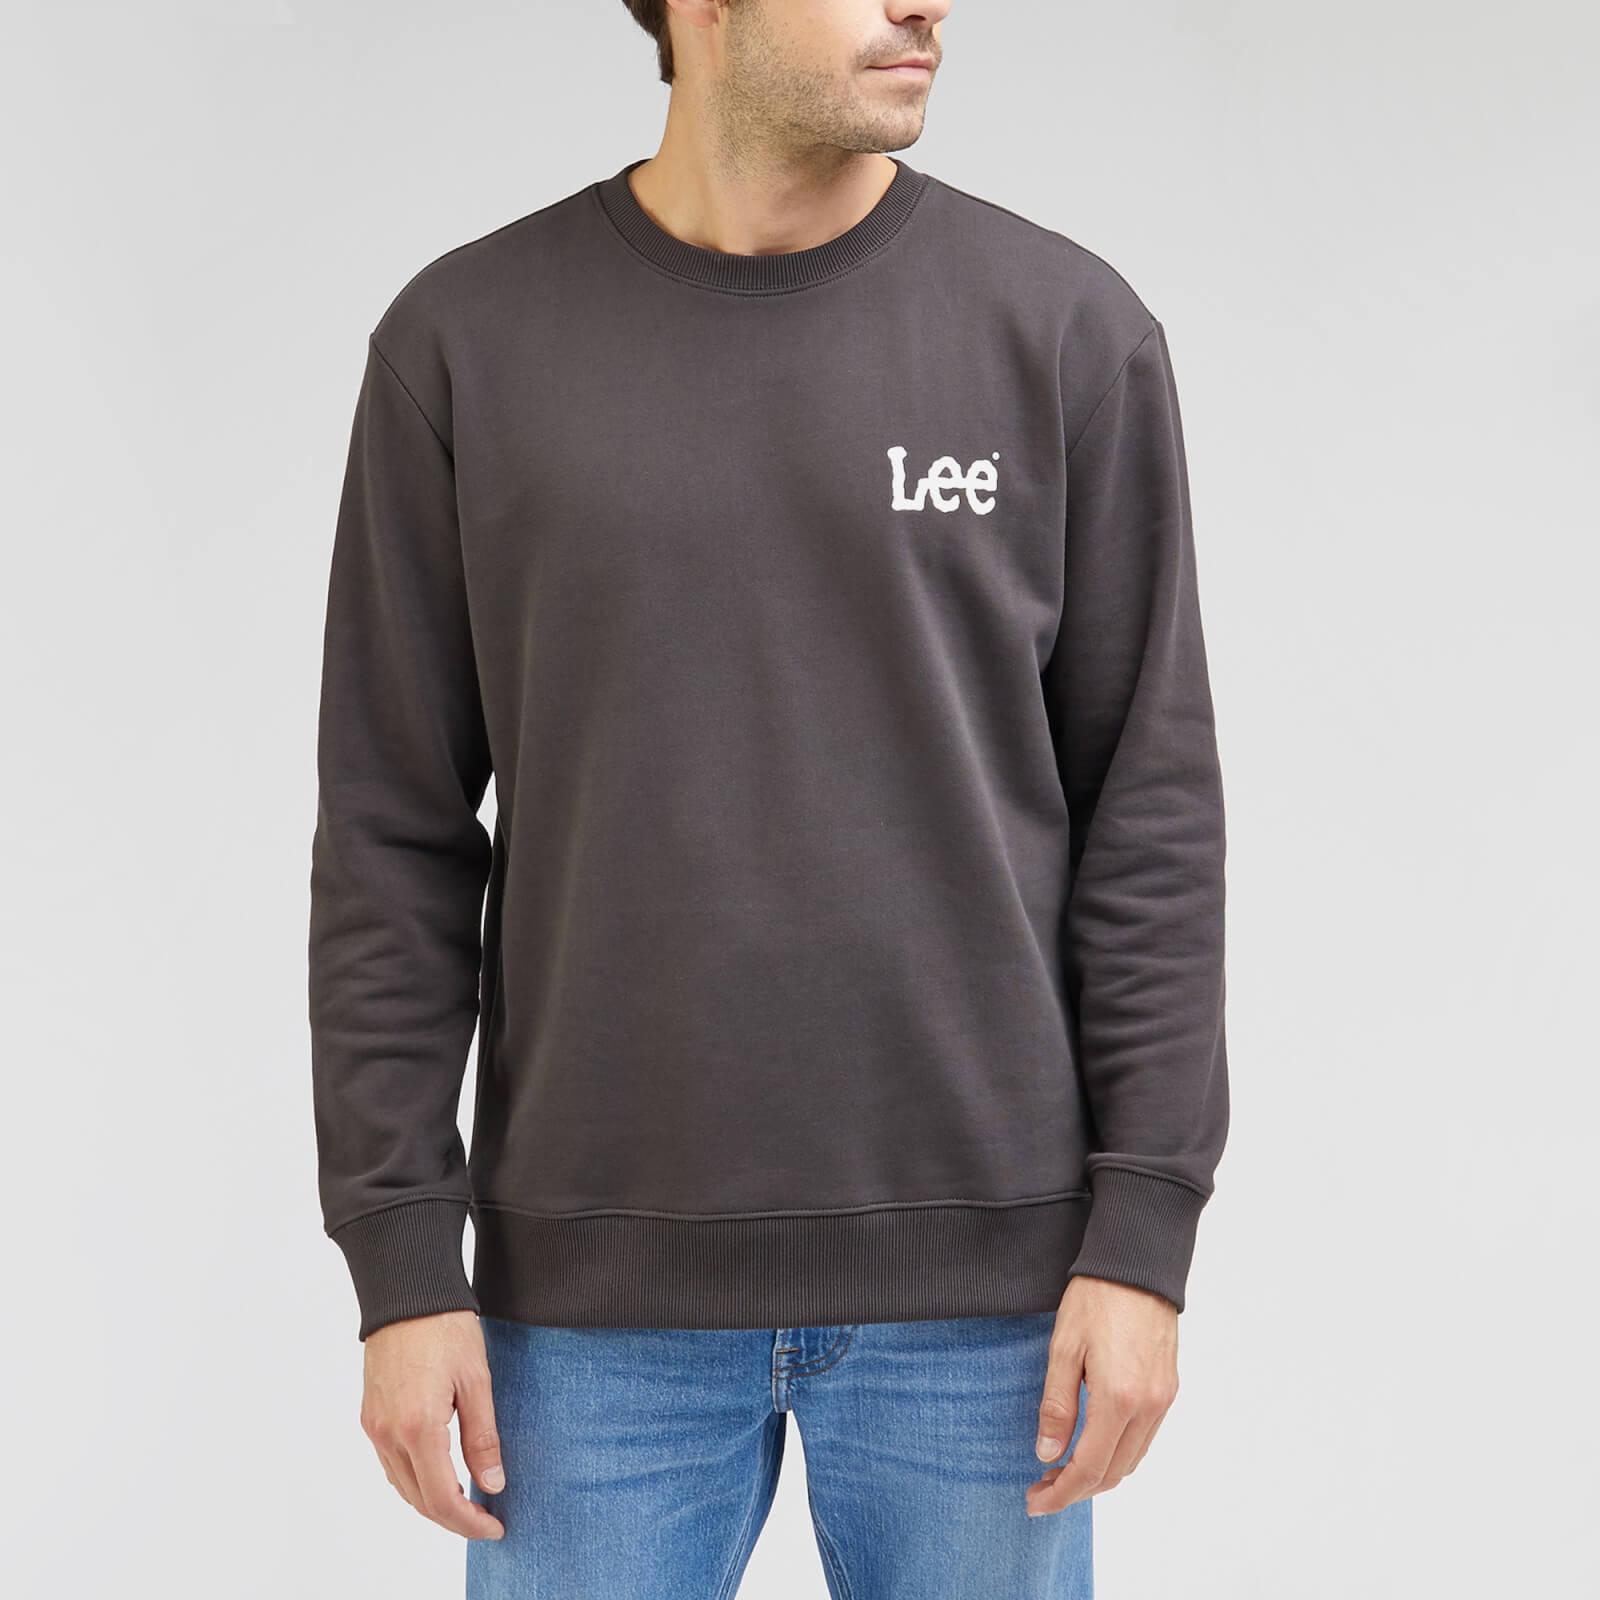 Lee Wobbly Logo Cotton Sweatshirt